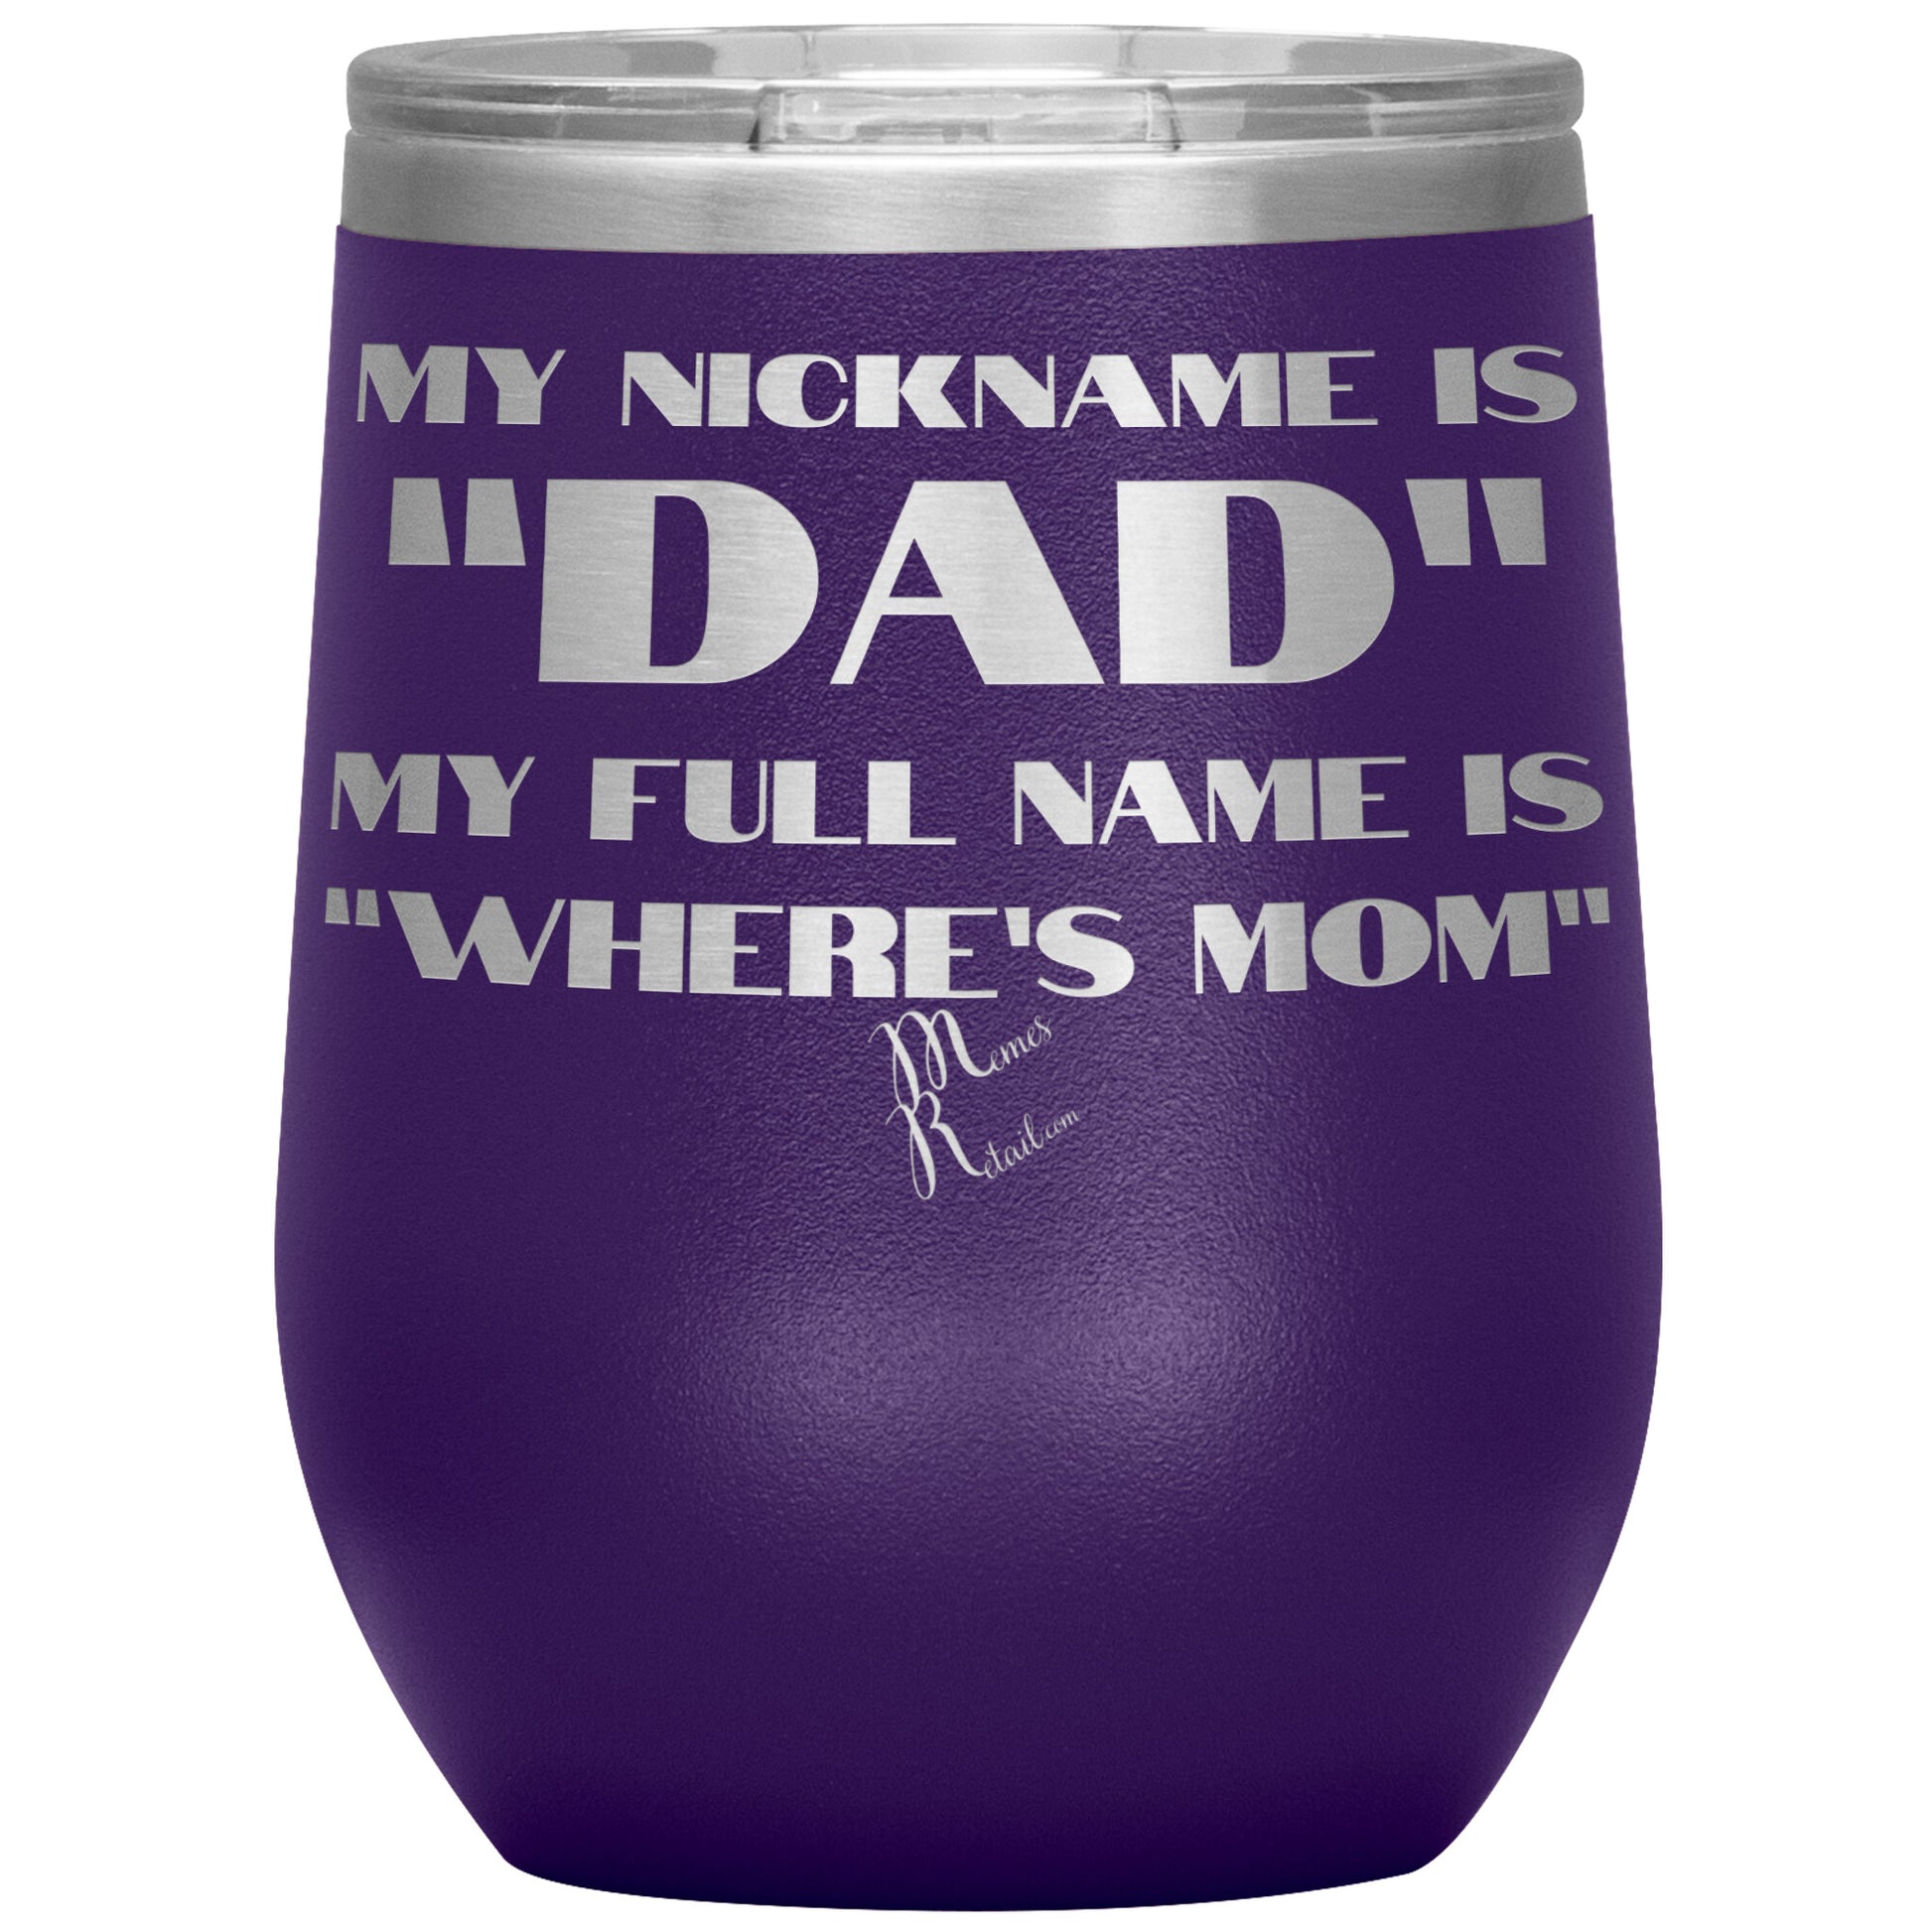 My Nickname is "Dad", My Full Name is "Where's Mom" Tumblers, 12oz Wine Insulated Tumbler / Purple - MemesRetail.com